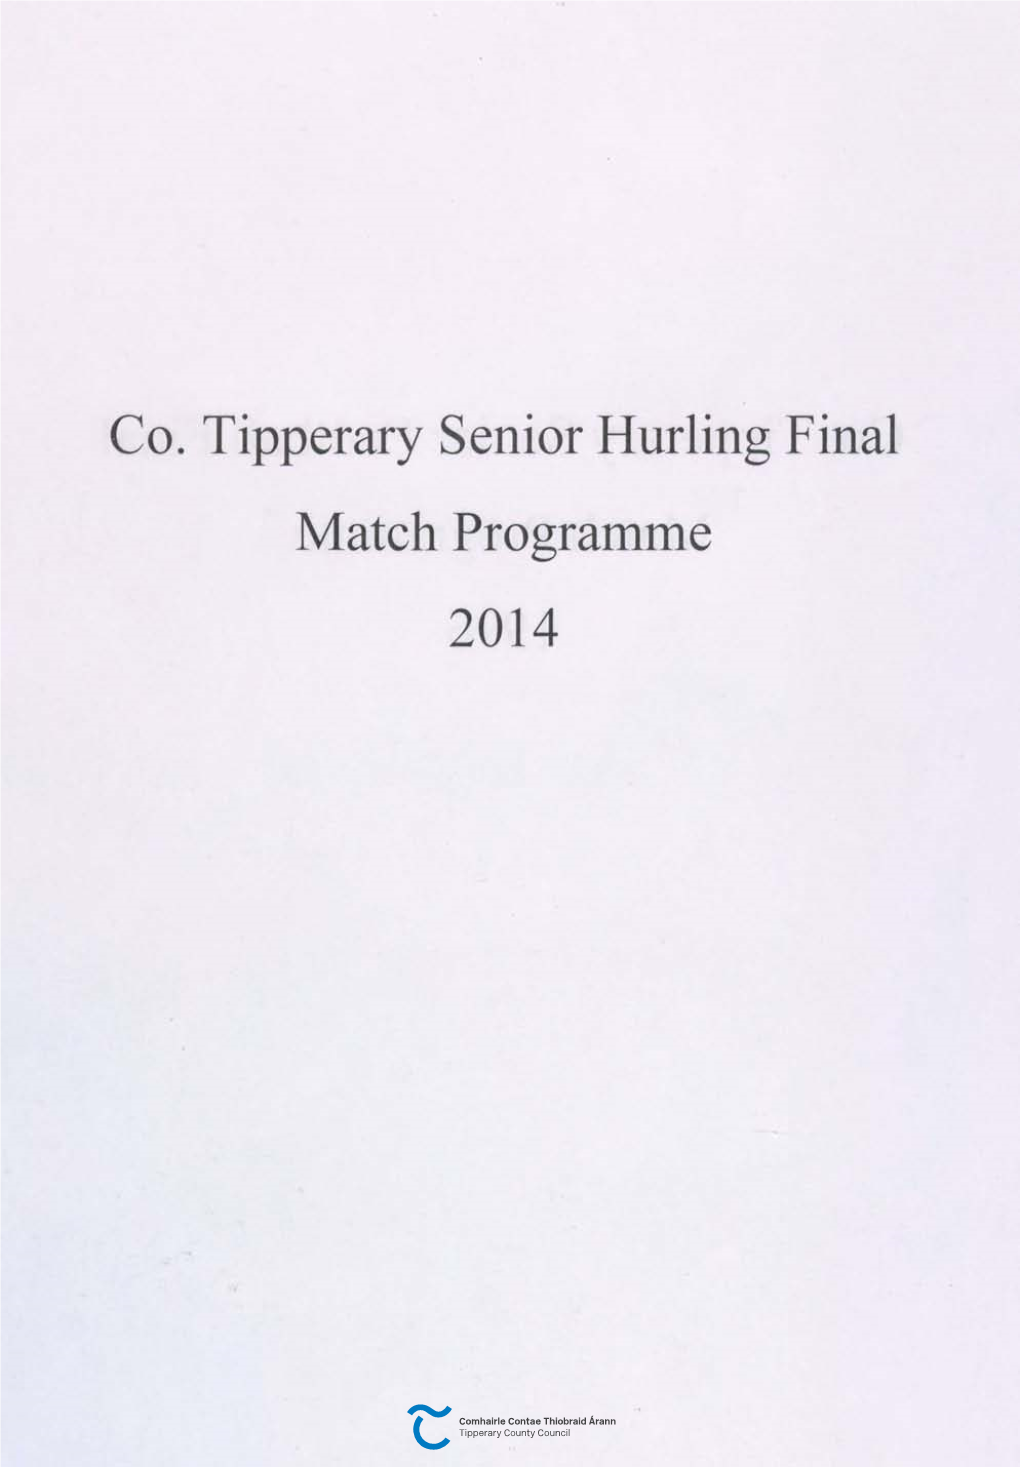 Co. Tipperary Senior Hurling Final Match Programme 2014